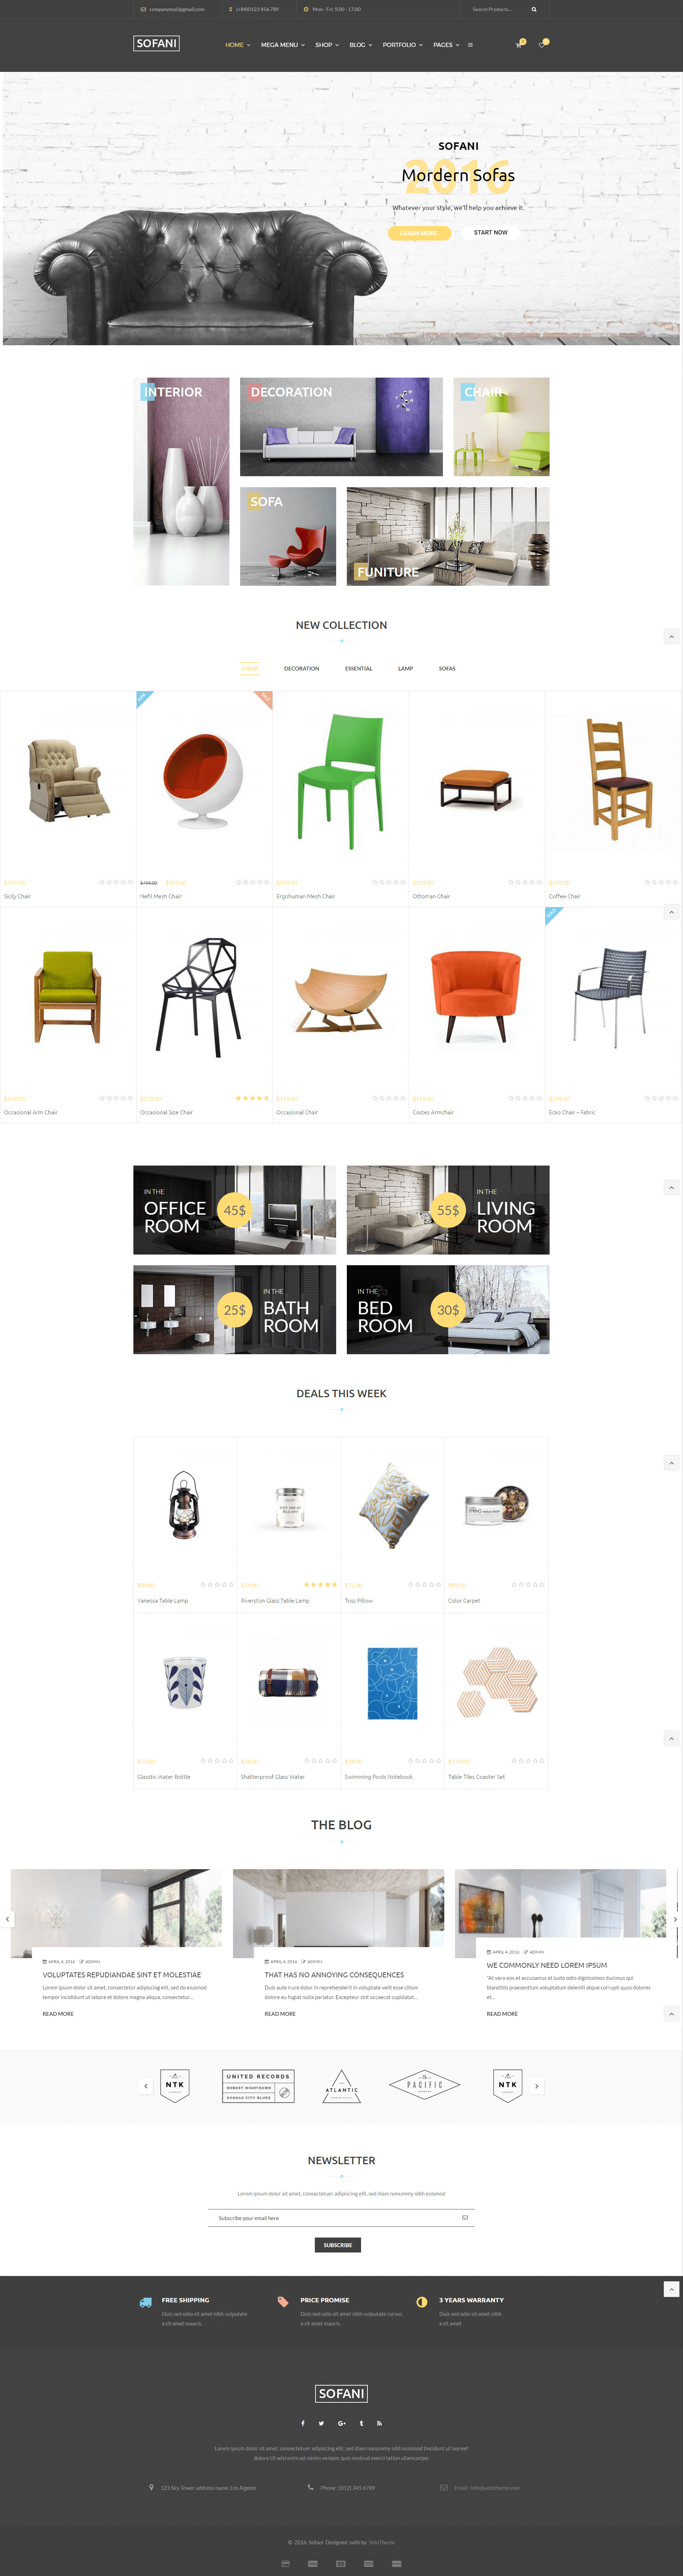 Mẫu thiết kế website nội thất đẹp